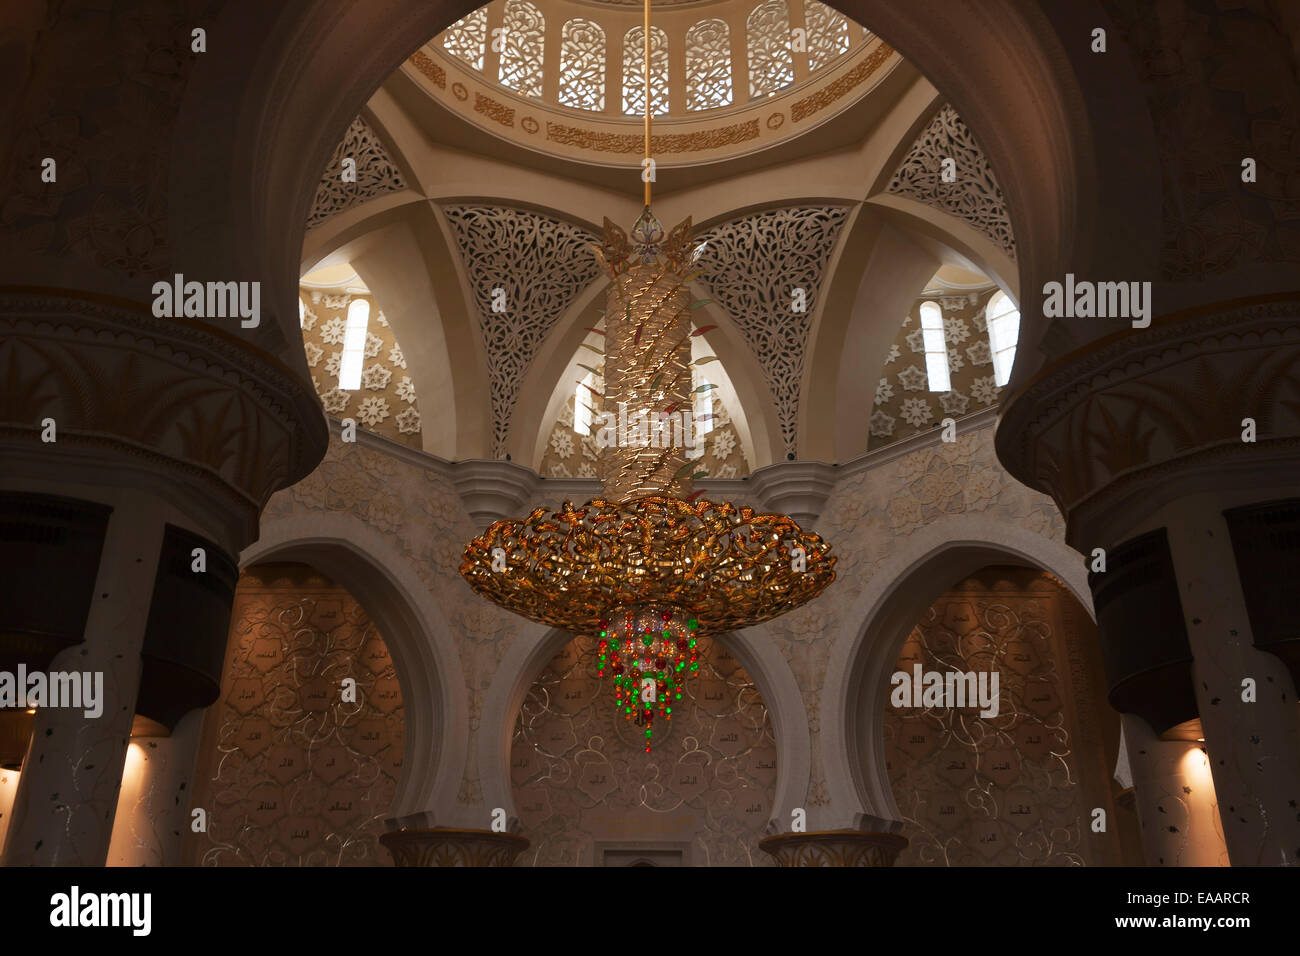 Sheikh Zayed Grand Mosque, Abu Dhabi, United Arab Emirates. Interior of the Main Prayer Hall. Stock Photo